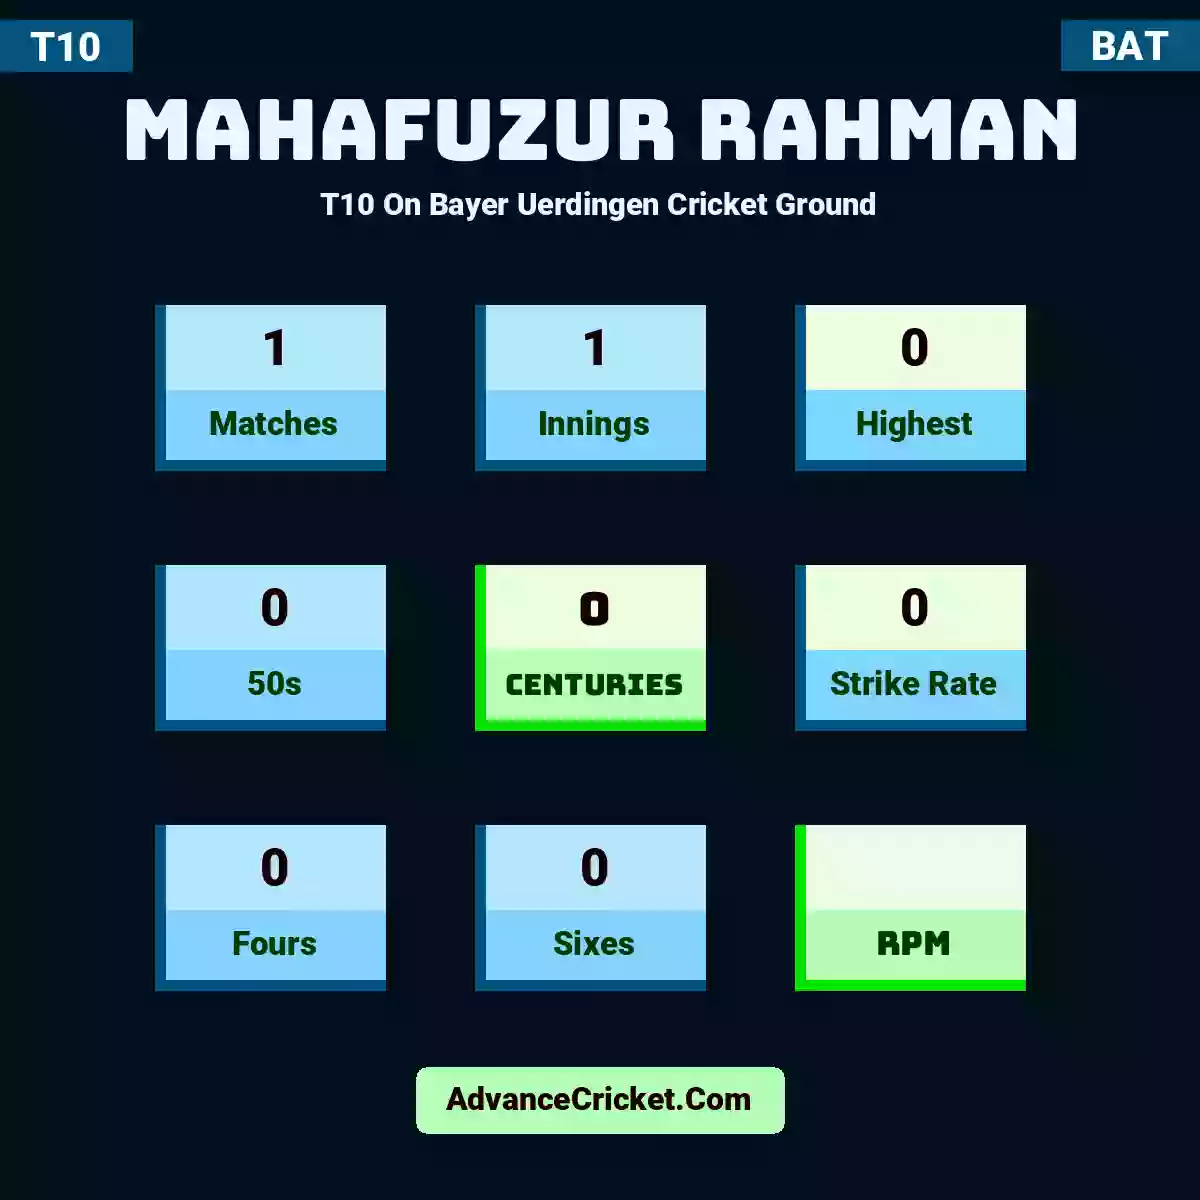 Mahafuzur Rahman T10  On Bayer Uerdingen Cricket Ground, Mahafuzur Rahman played 1 matches, scored 0 runs as highest, 0 half-centuries, and 0 centuries, with a strike rate of 0. M.Rahman hit 0 fours and 0 sixes.